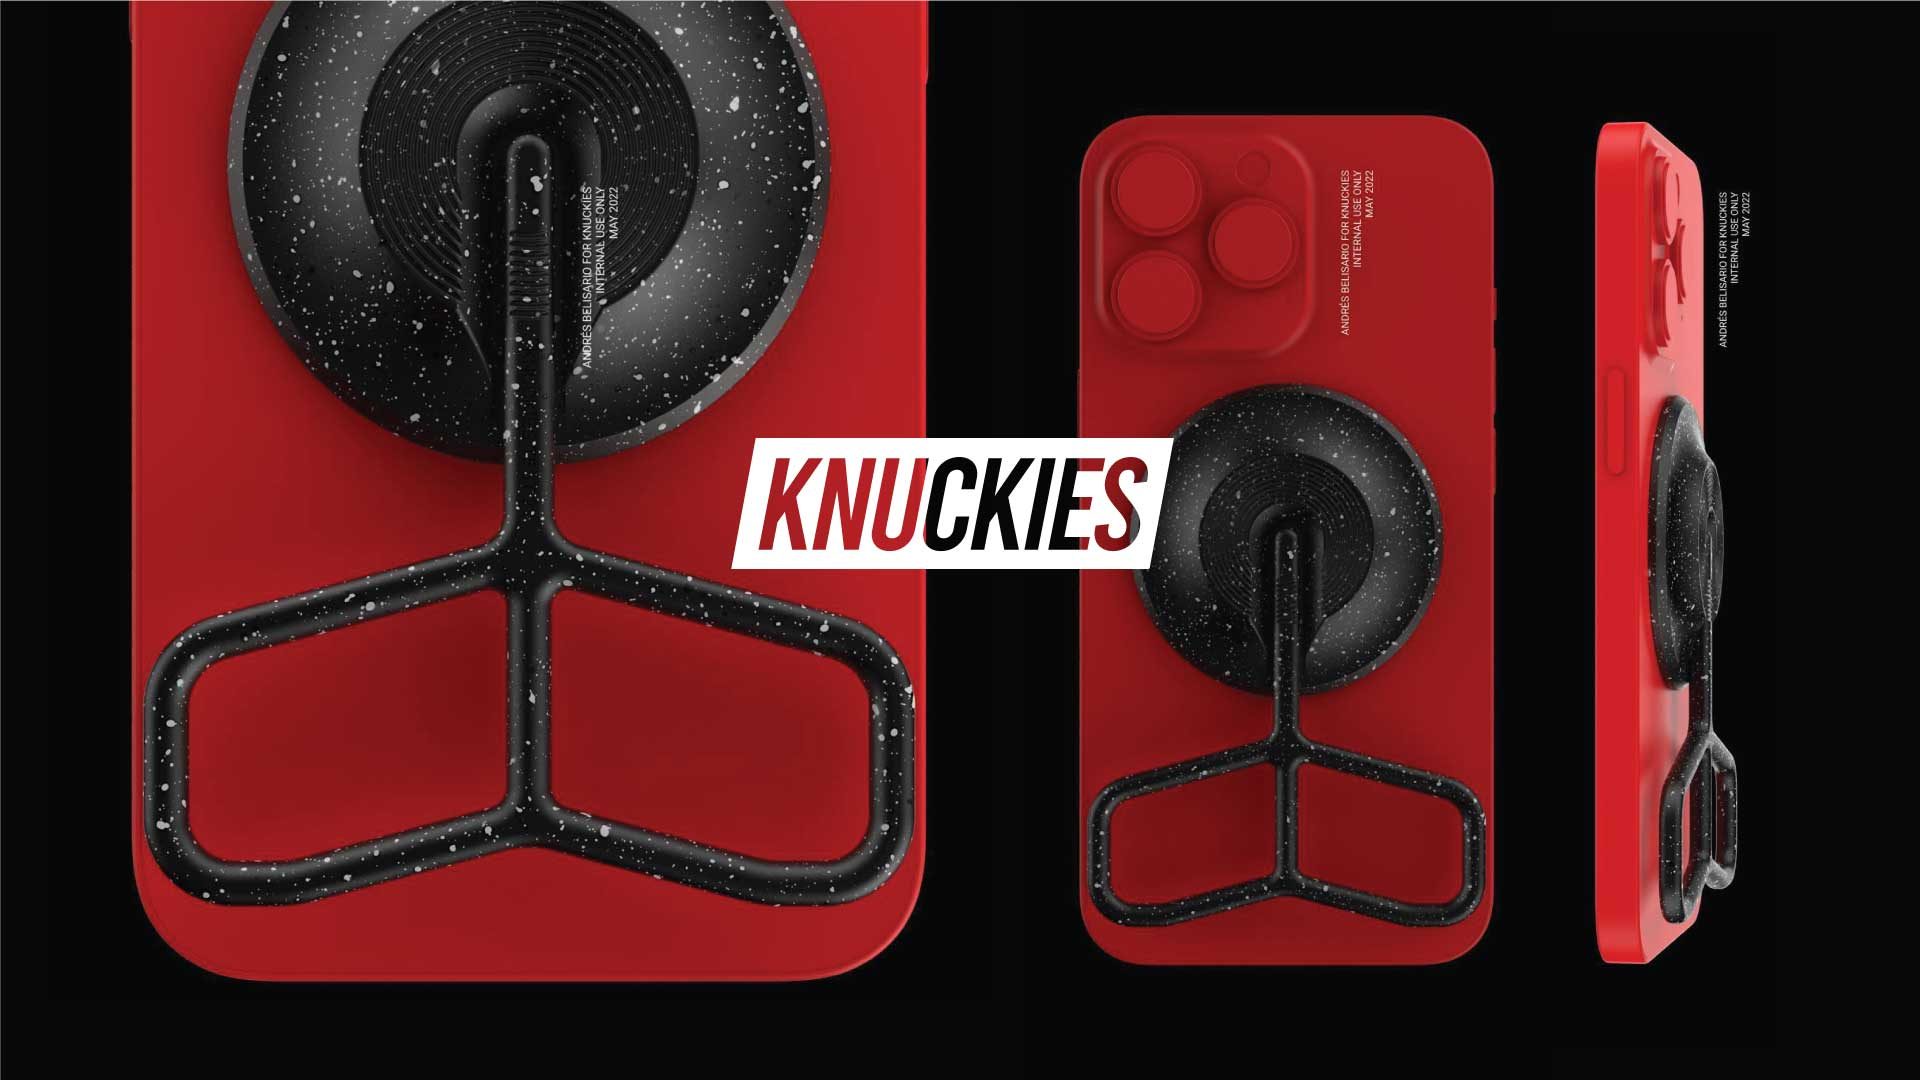 knuckies-new-red